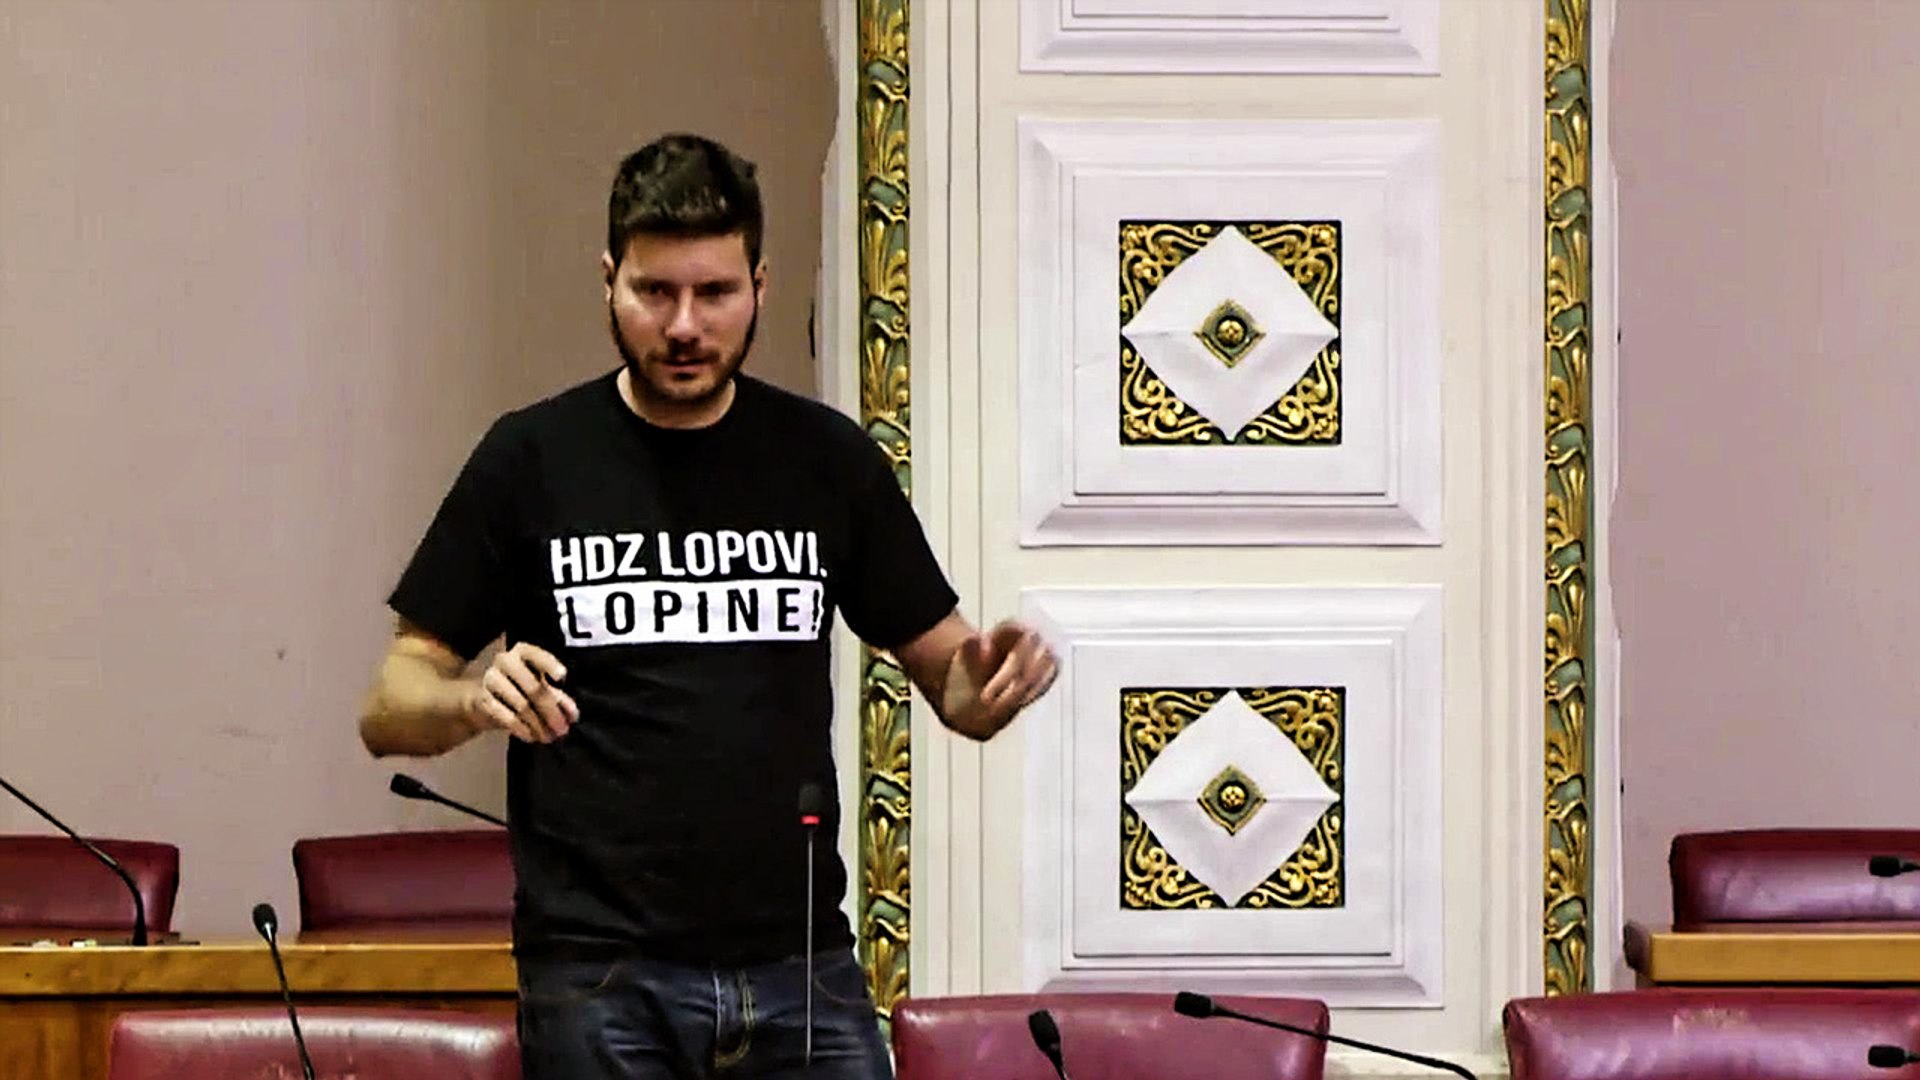 Pernar: "Zašto smeta majica: HDZ LOPOVI. LOPINE!?" - video Dailymotion